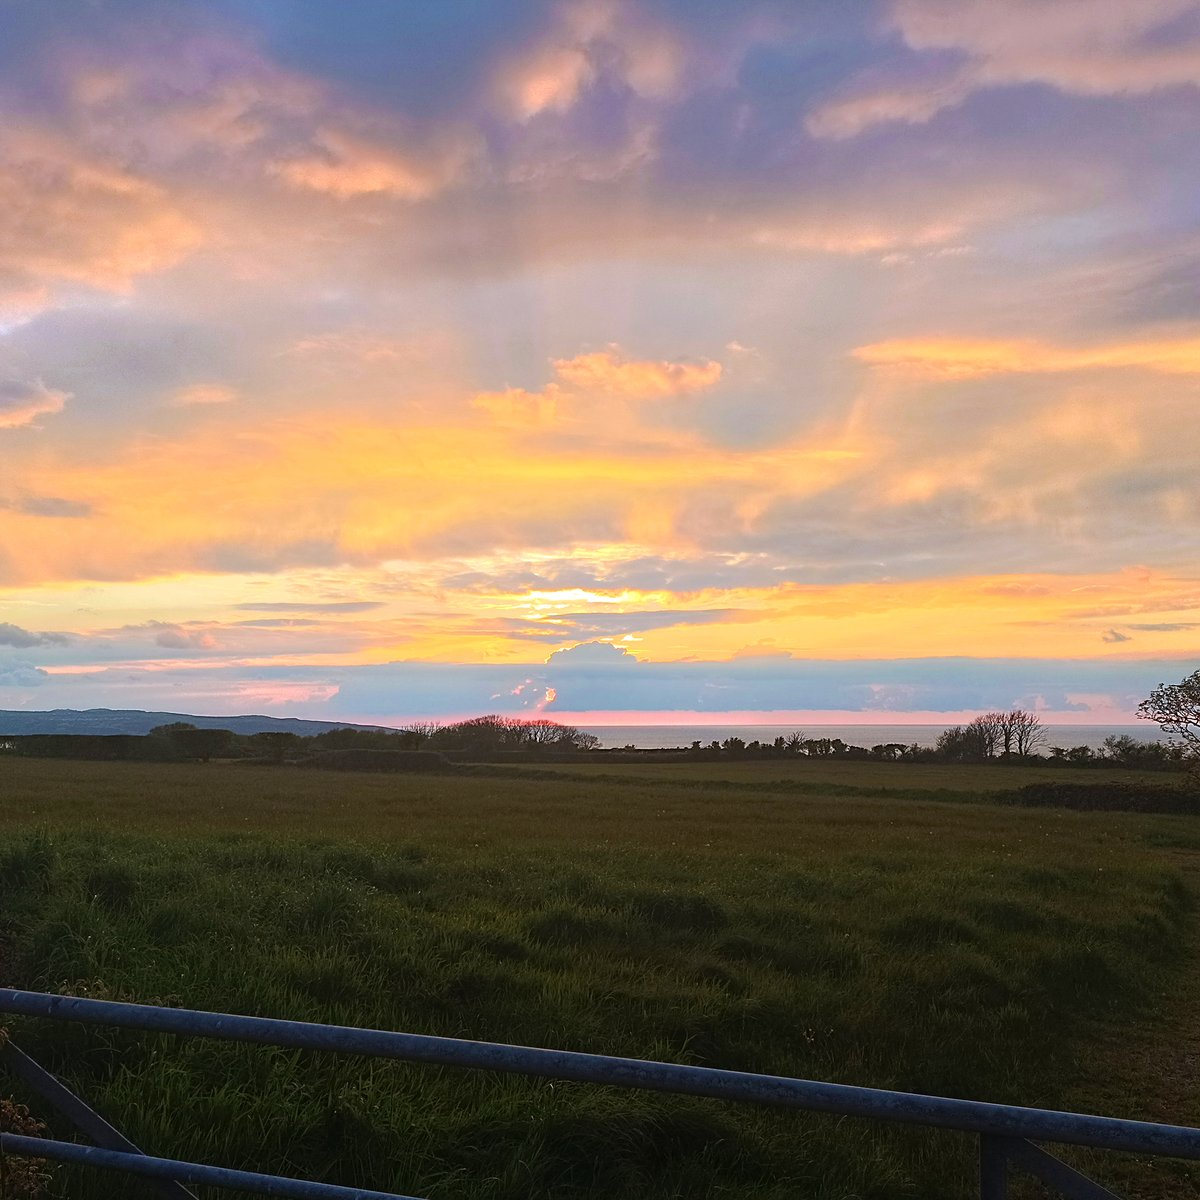 Dinas Cross sunset tonight. #Westisbest #stormhour #photohour #Pembrokeshire